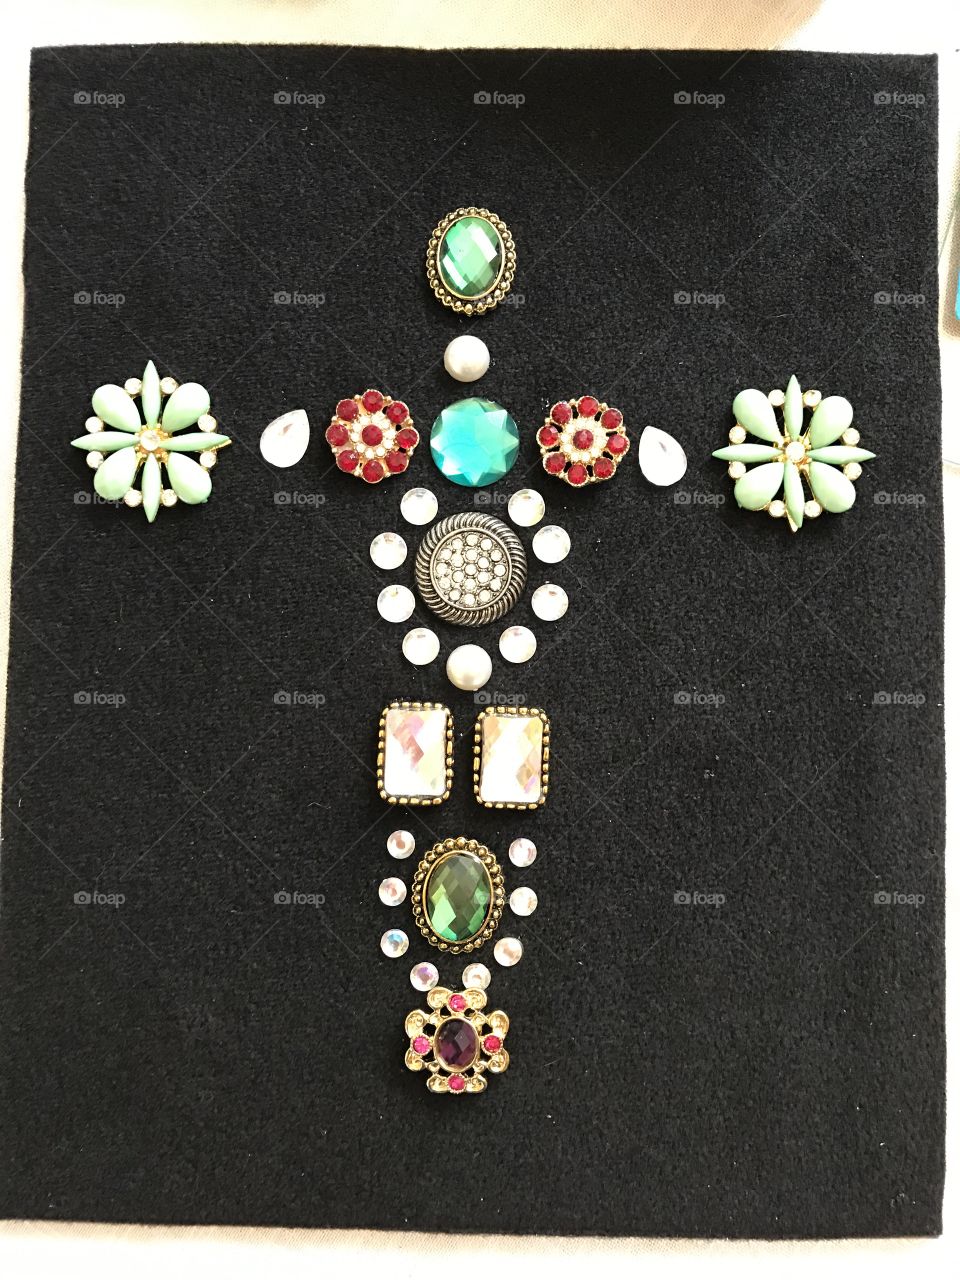 Cross costume jewelry art 